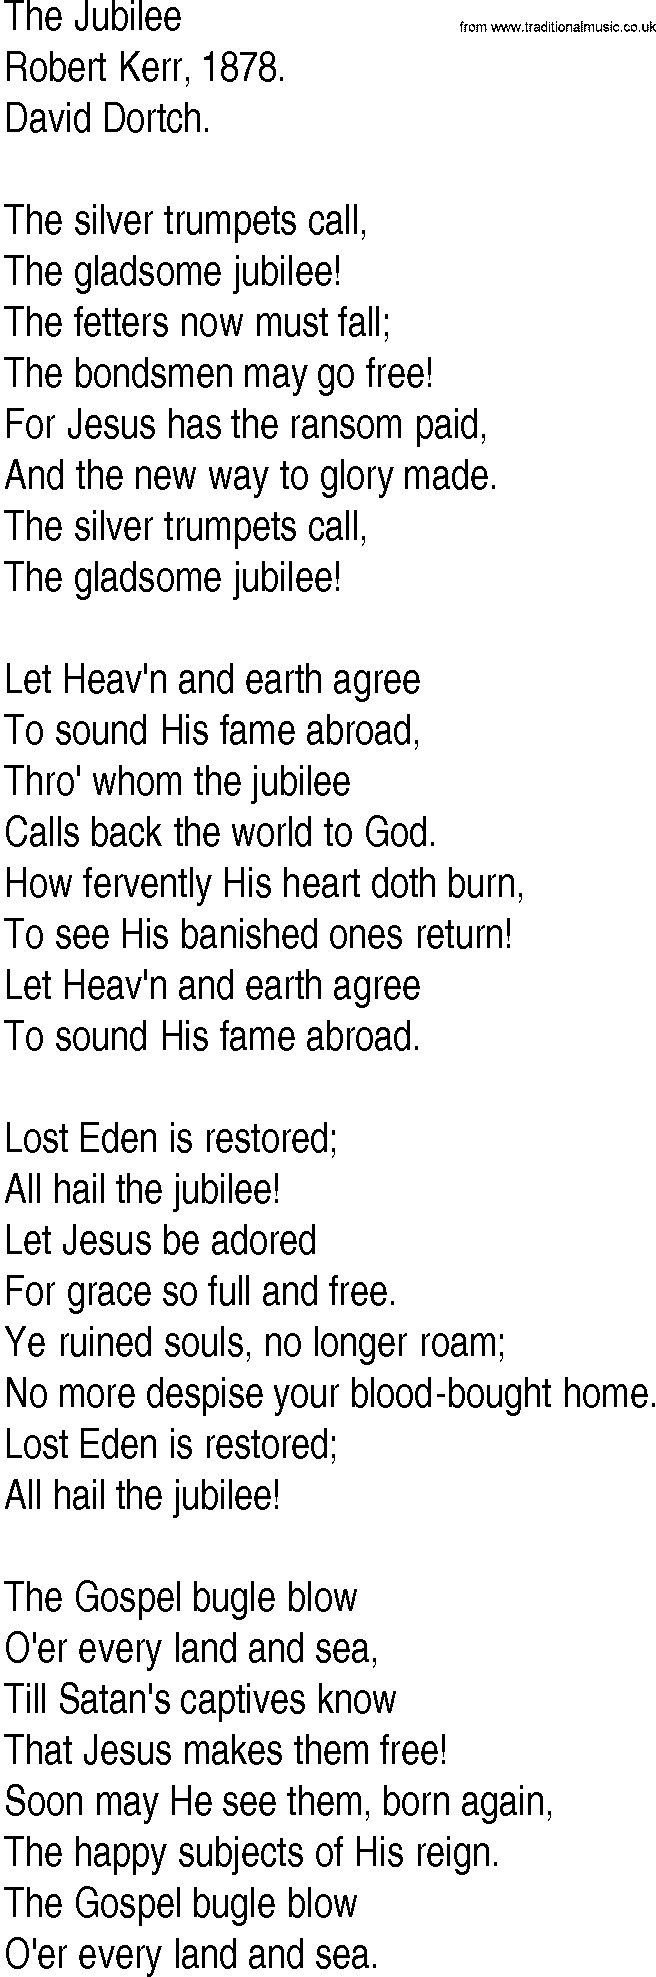 Hymn and Gospel Song: The Jubilee by Robert Kerr lyrics